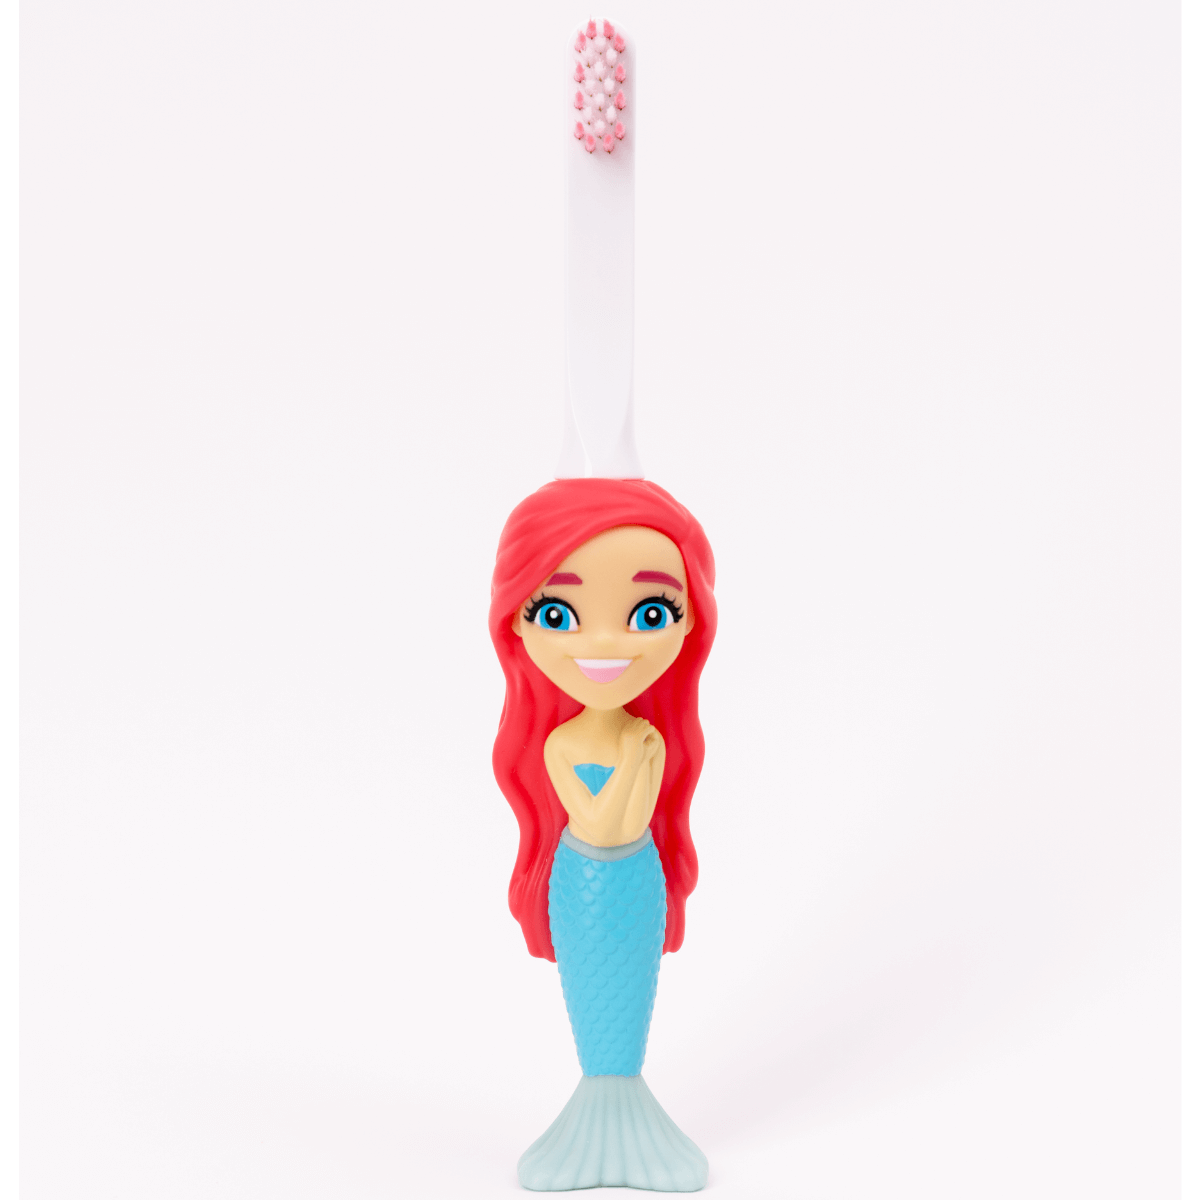 Toothbrush showcasing Aqua the Mermaid design